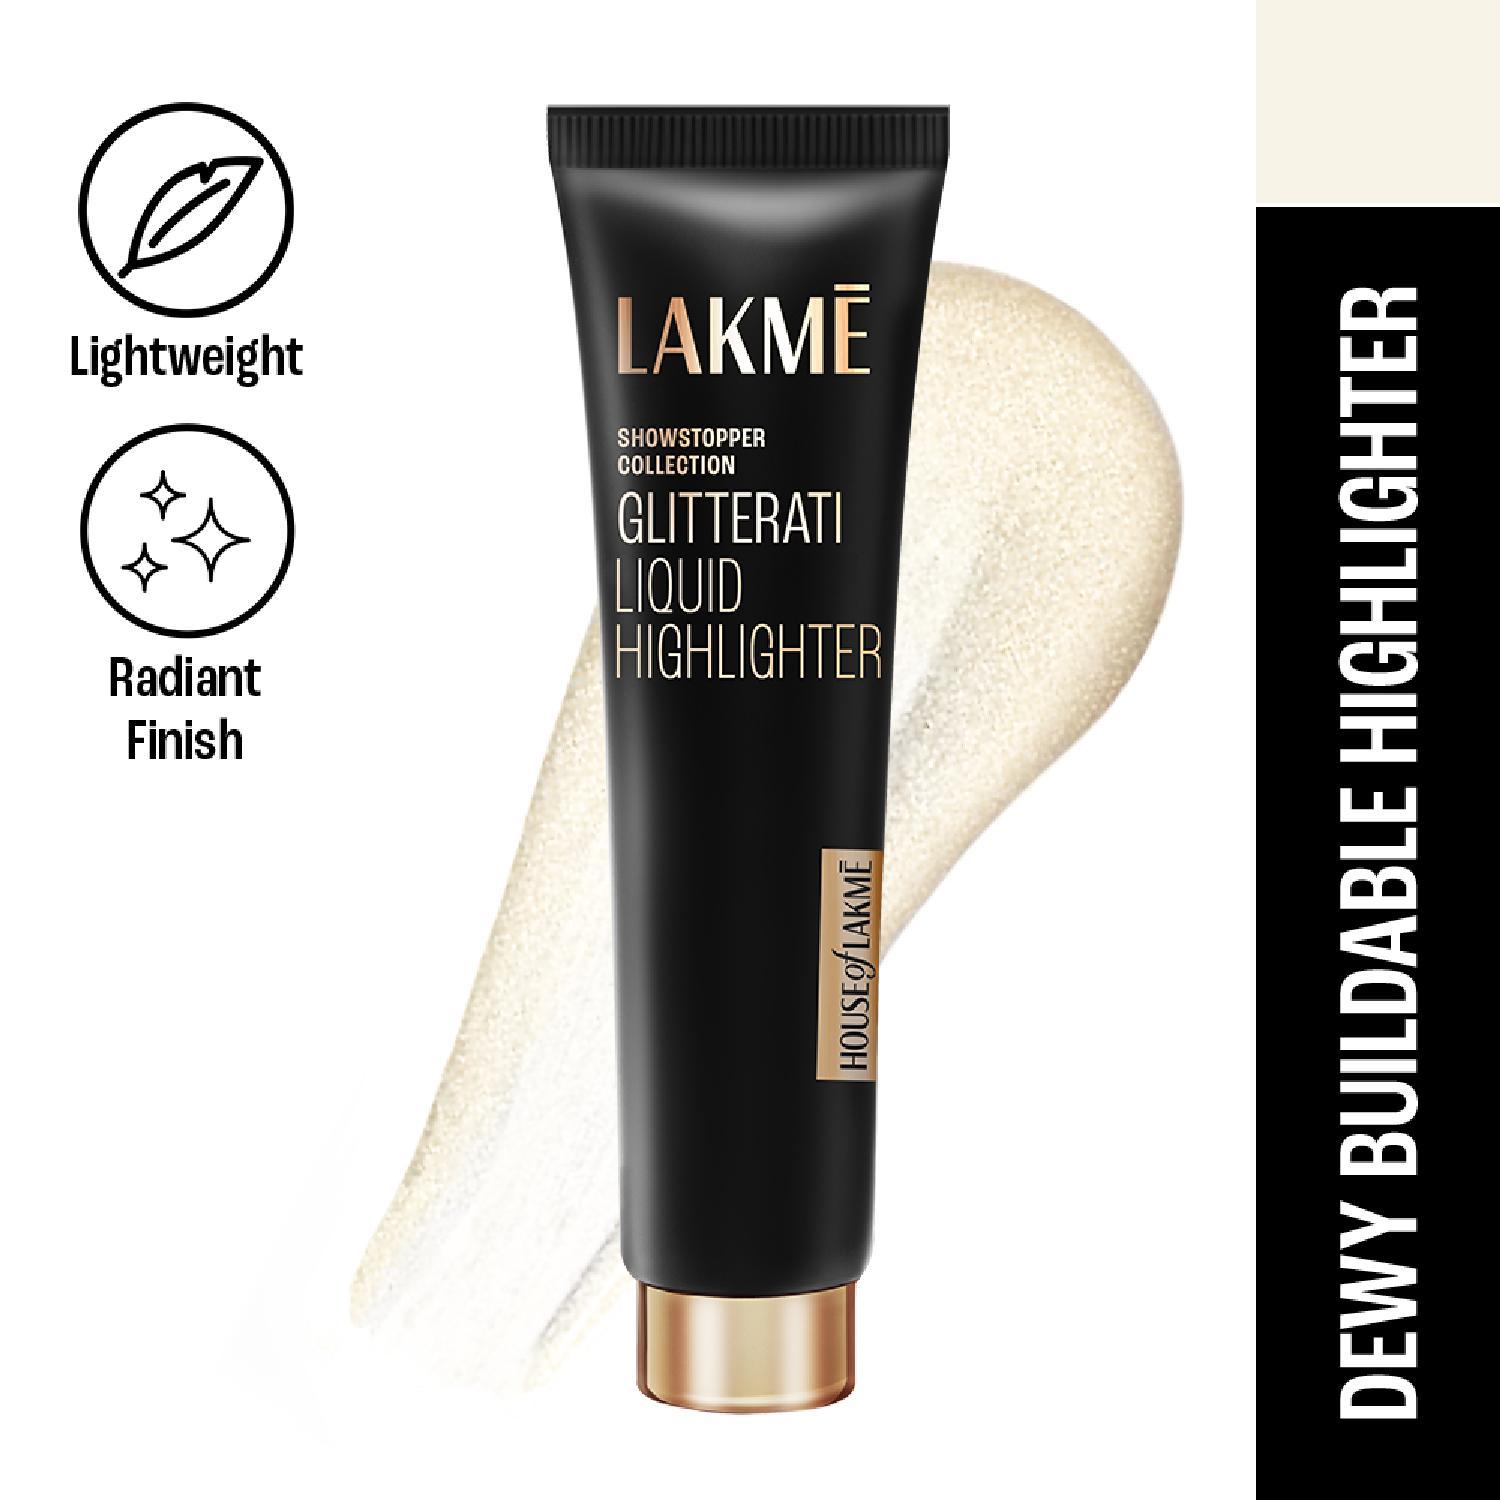 Lakme | Lakme Glitterati Liquid Highlighter For Dewy Makeup Look - Ivory (25 g)